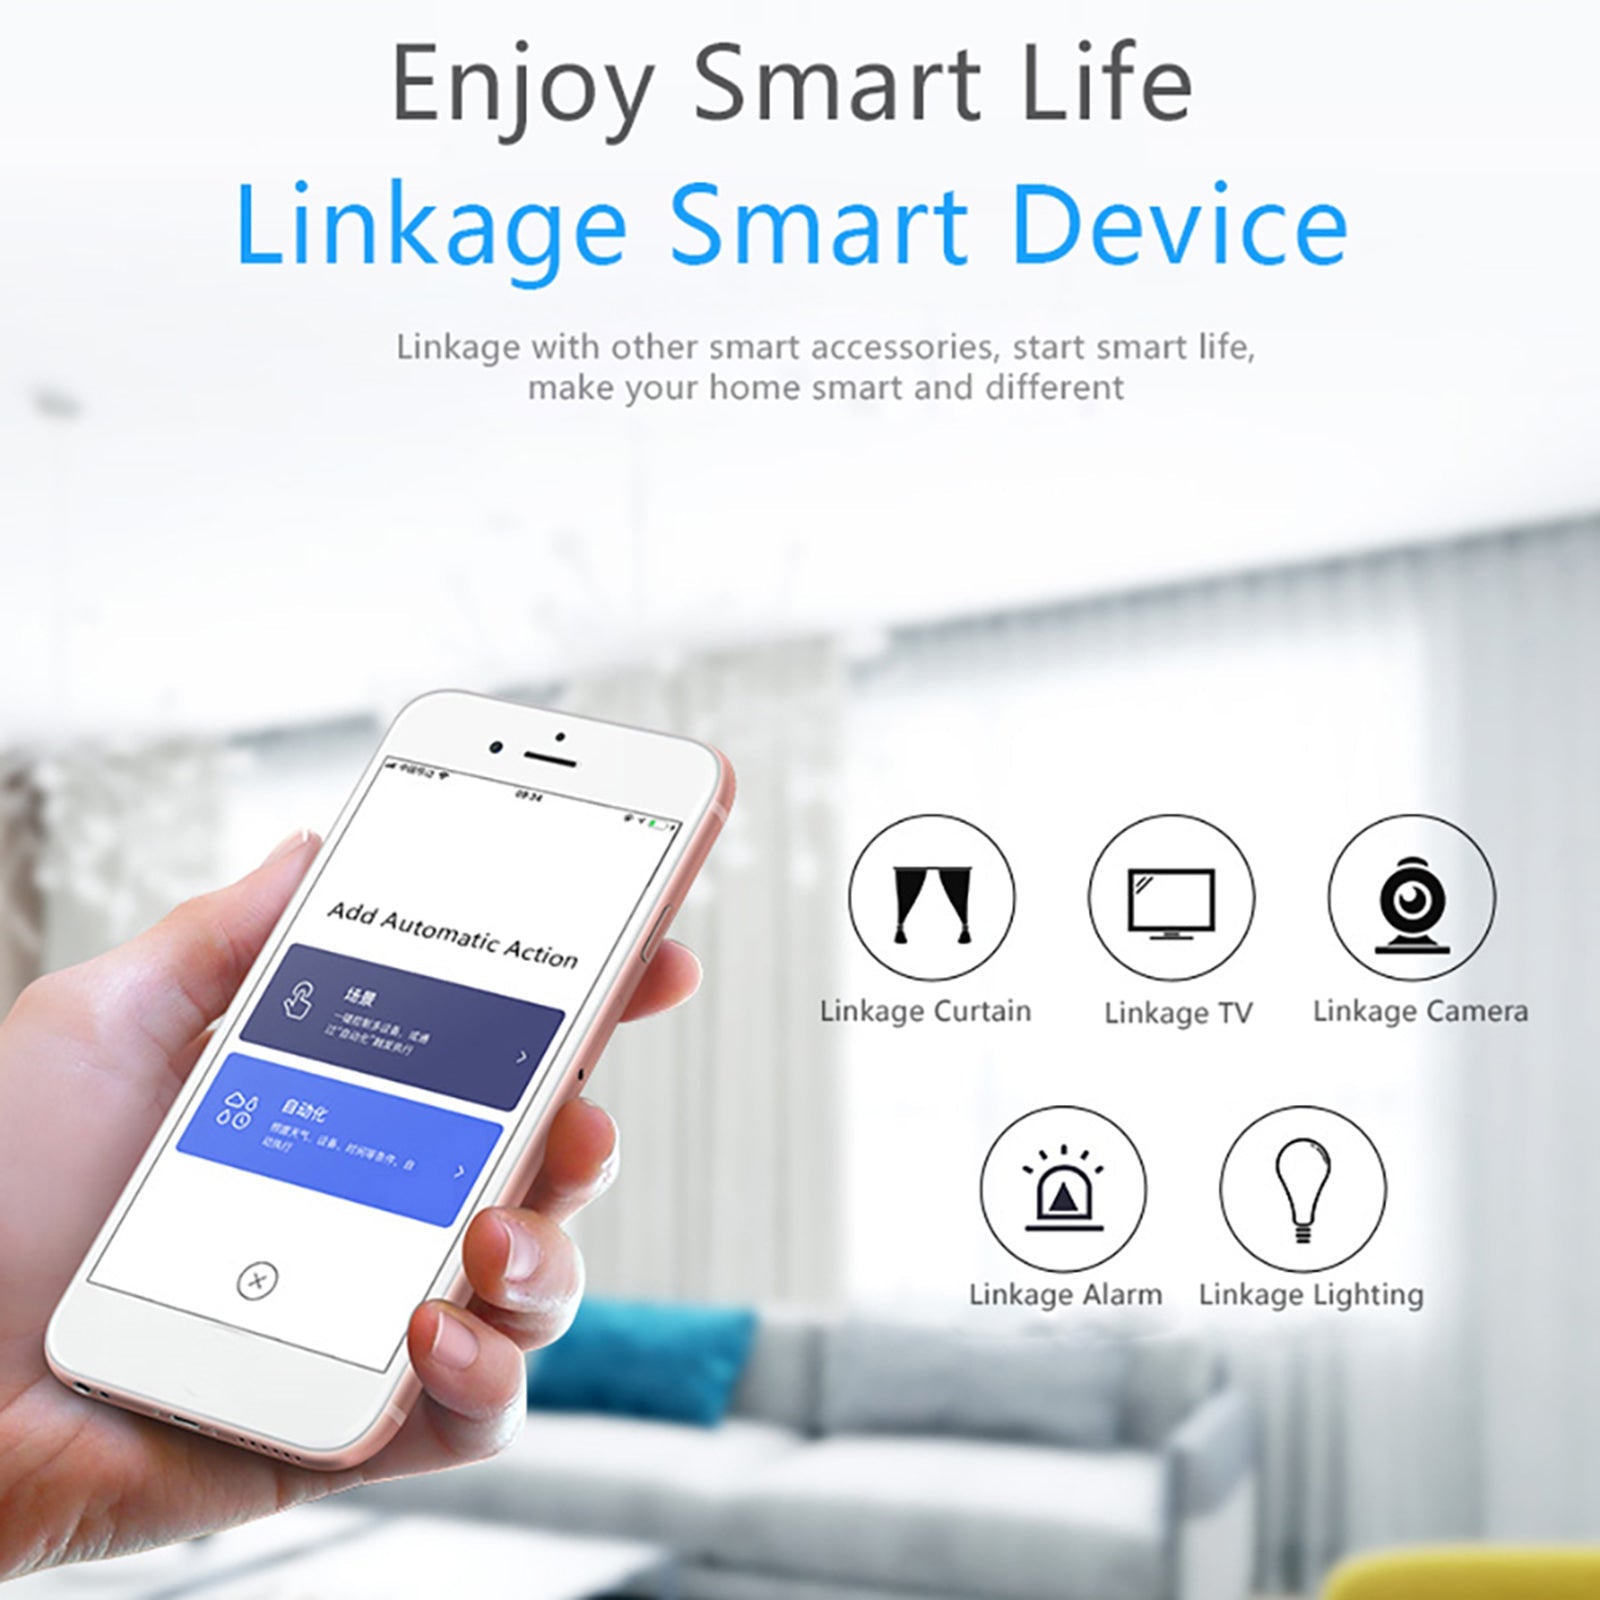 Smart Bulb +WiFi Smart PIR Motion Sensor Bundle